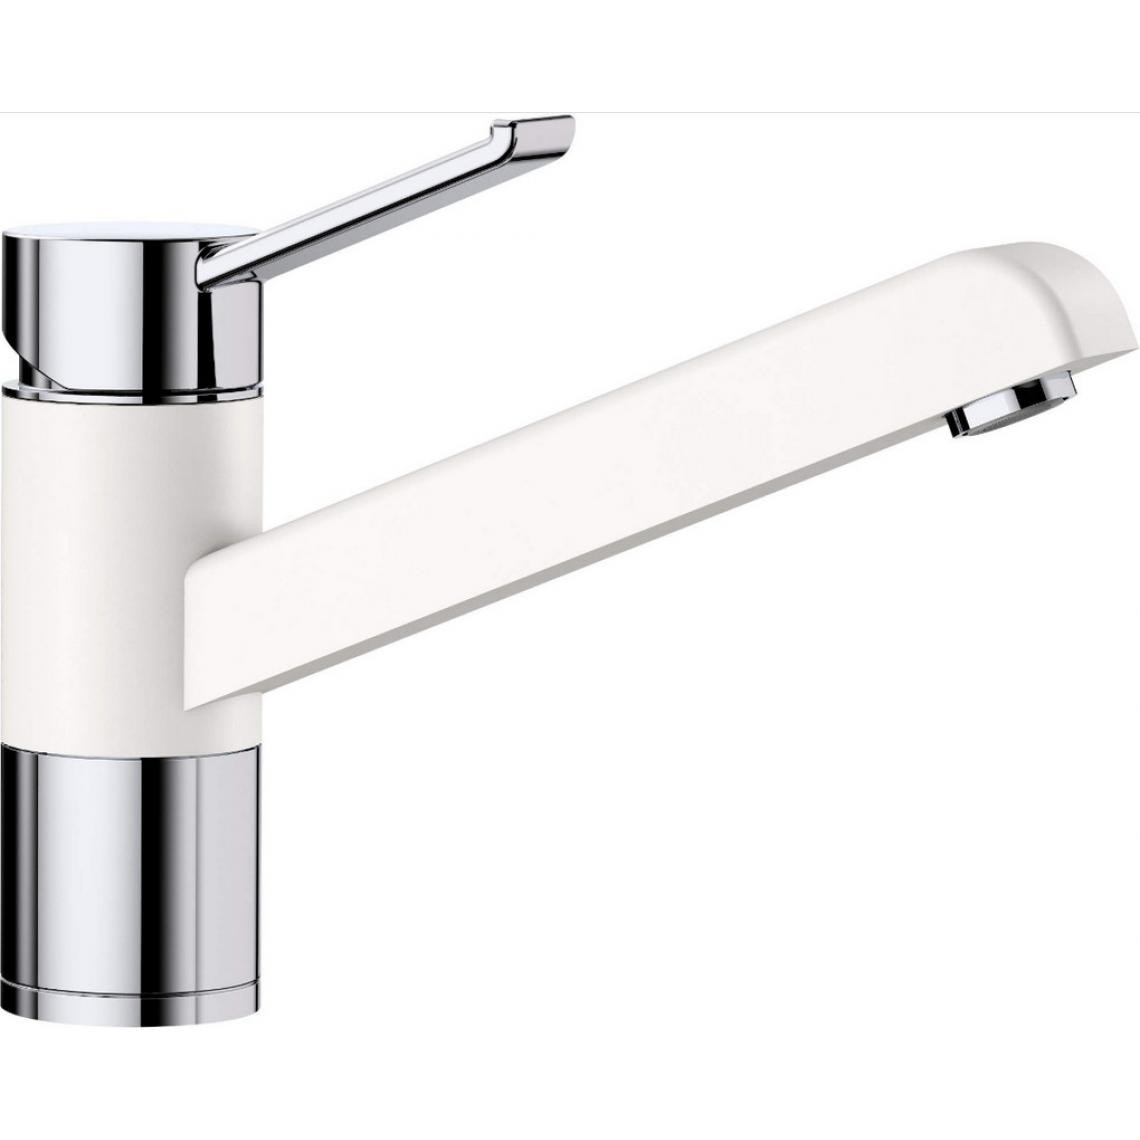 Blanco - blanco - 517808 - Robinet de lavabo